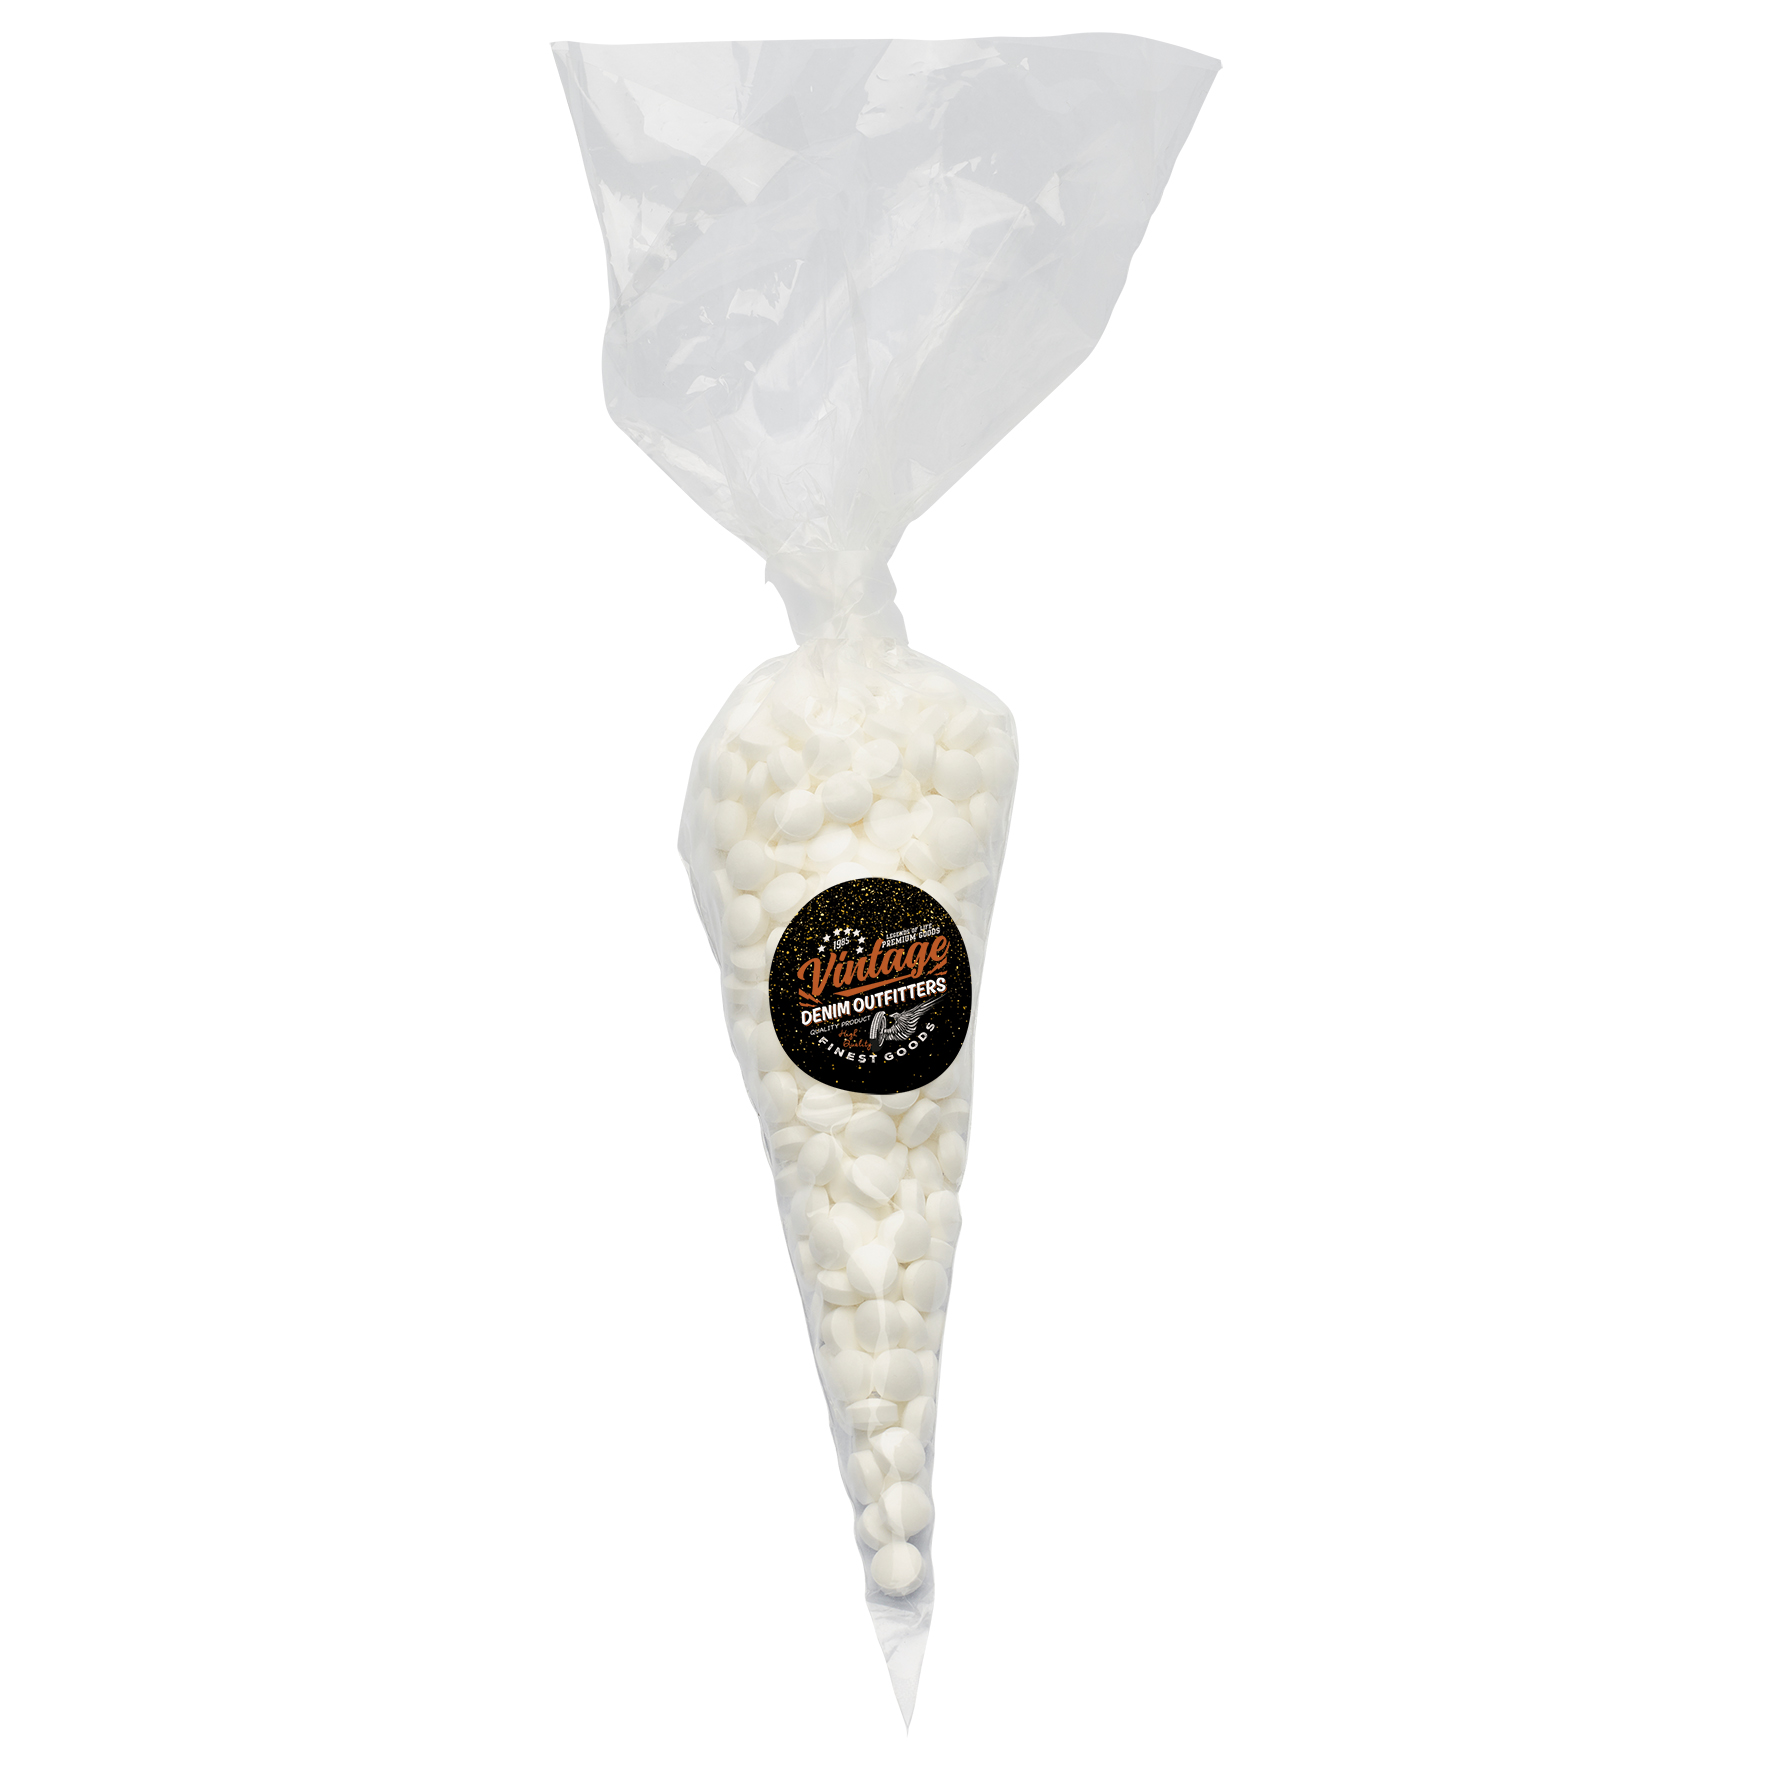 c 0604dmi 00 02 - Sweet cones with dextrose mints (195g)